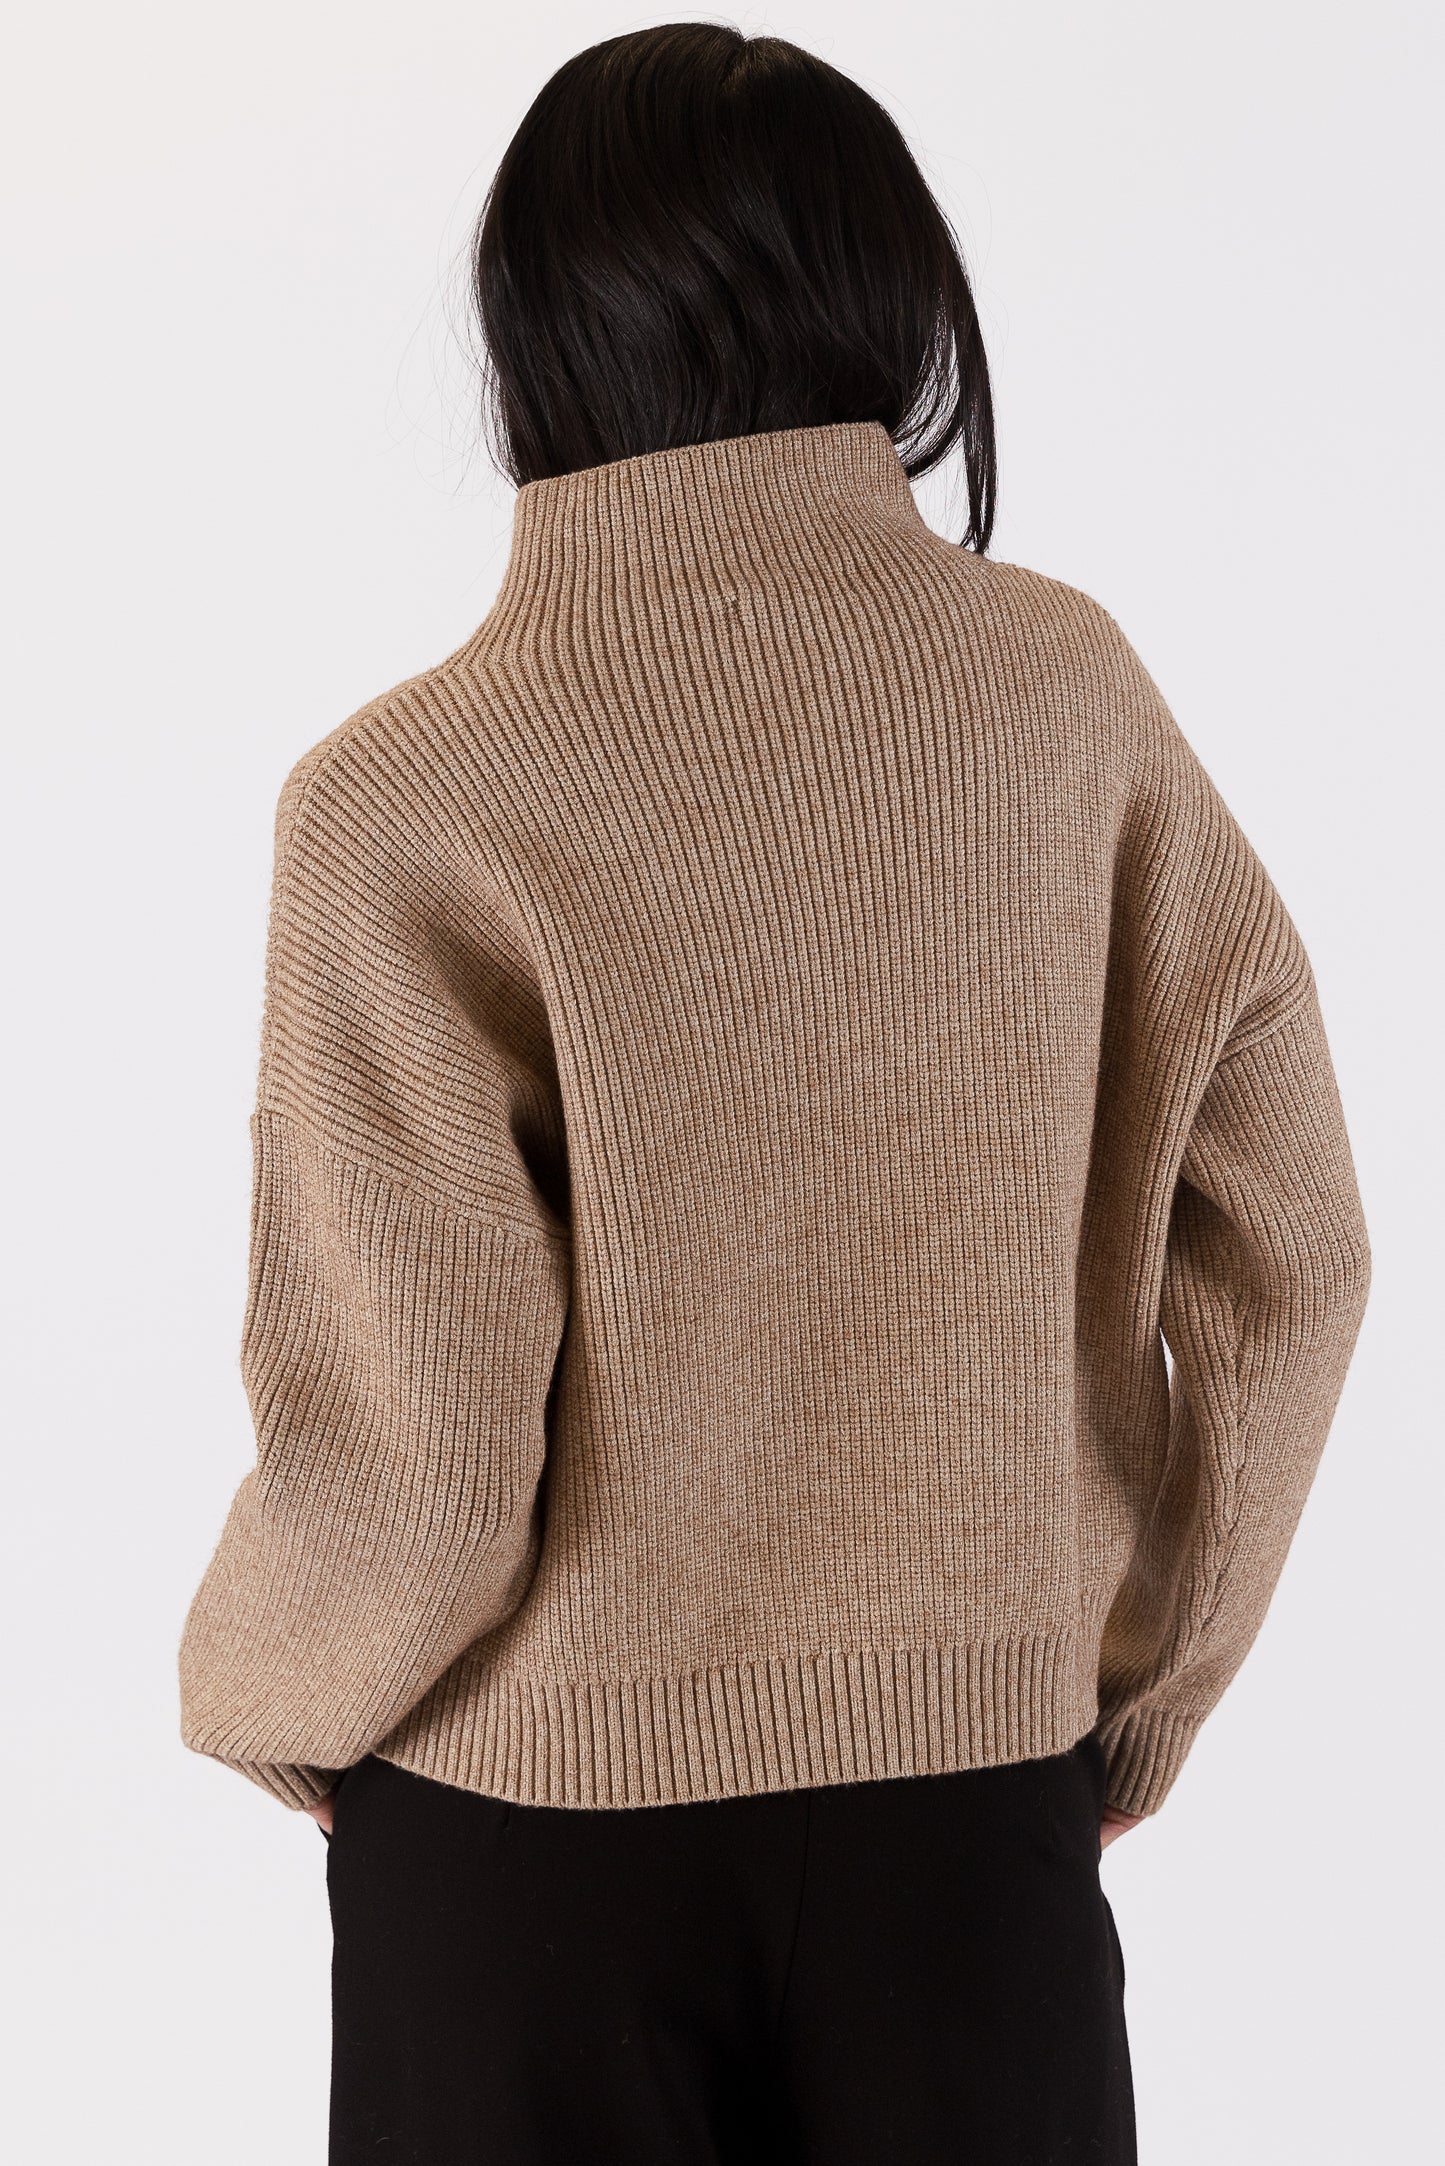 Evolet Ribbed Knit Sweater - Camel